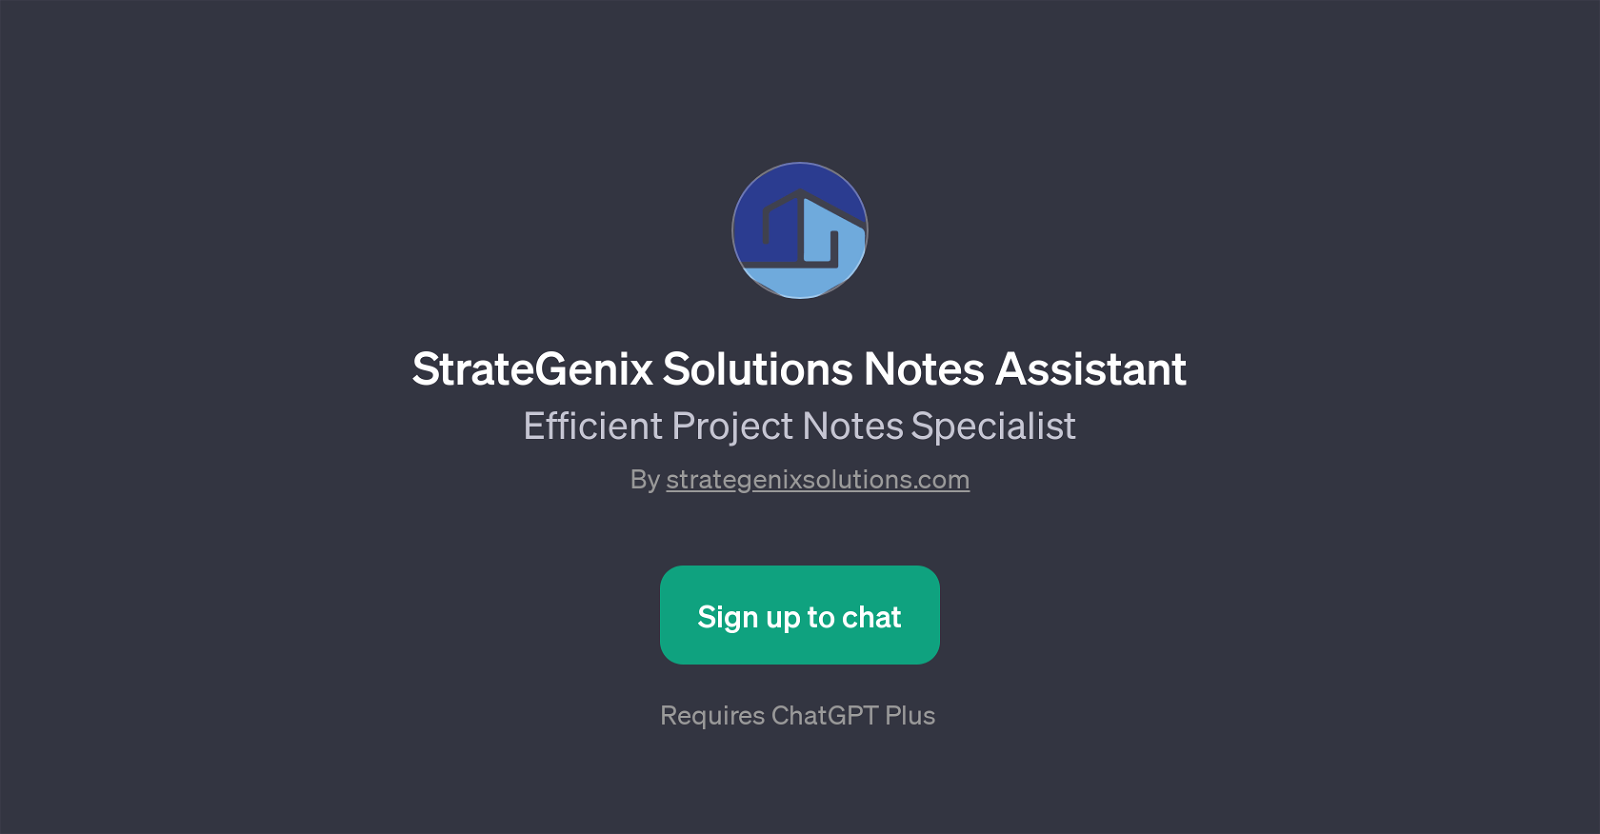 StrateGenix Solutions Notes Assistant website